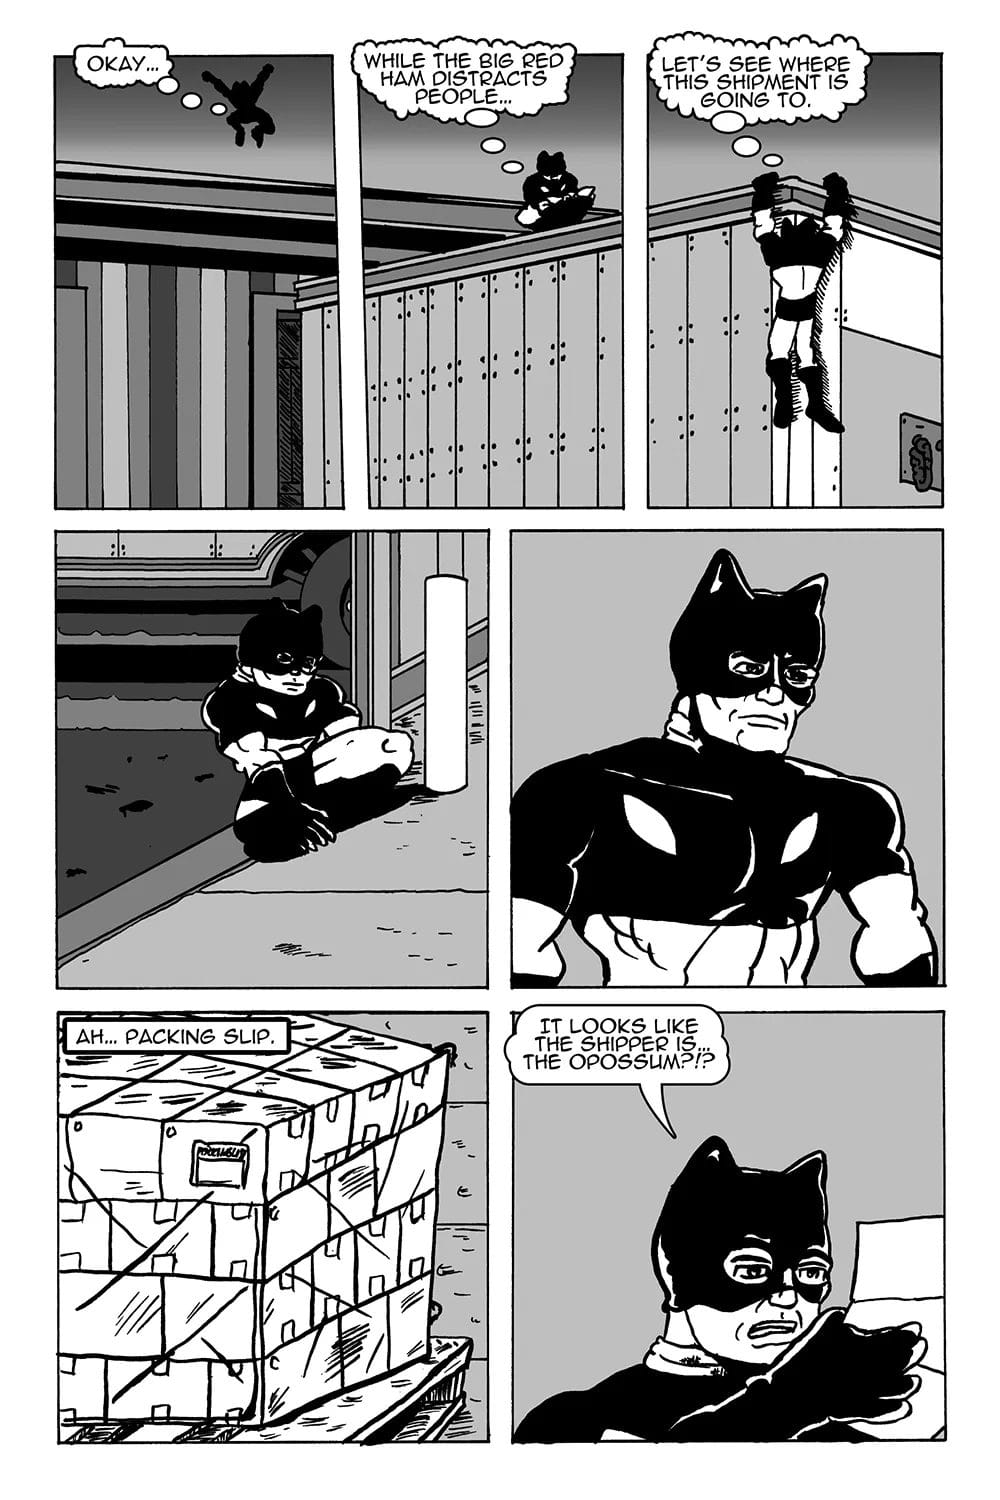 The Siamese Cat takes advantage of Superhero's appearance.